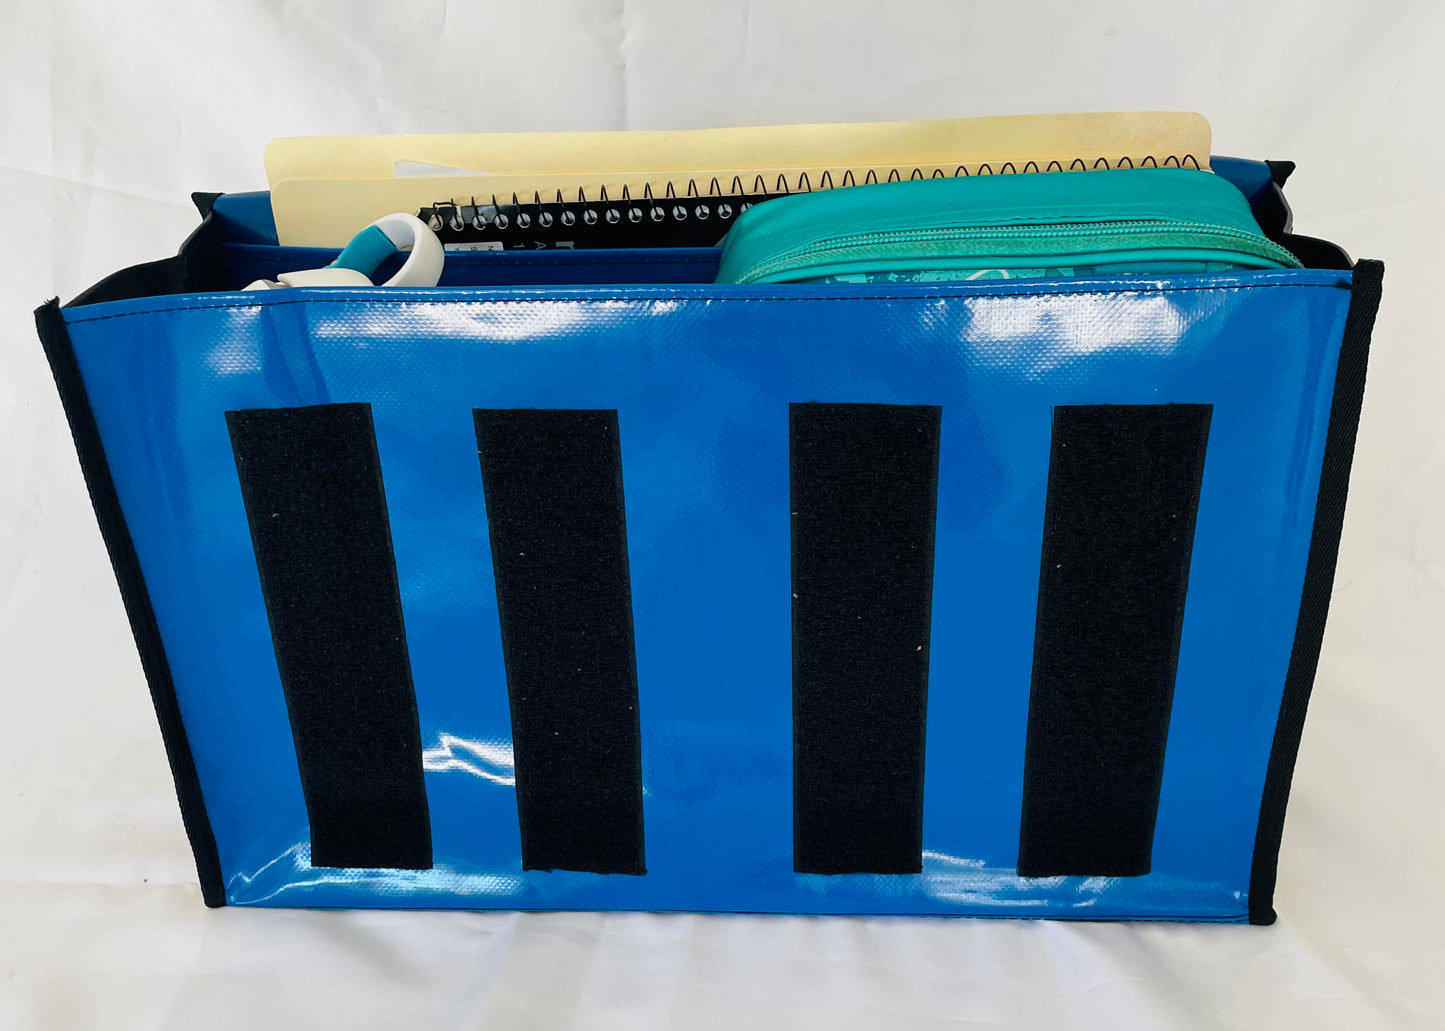 CribBags Small Blue and Black Crib bag. Tough Vinyl Construct, Document pocket inside